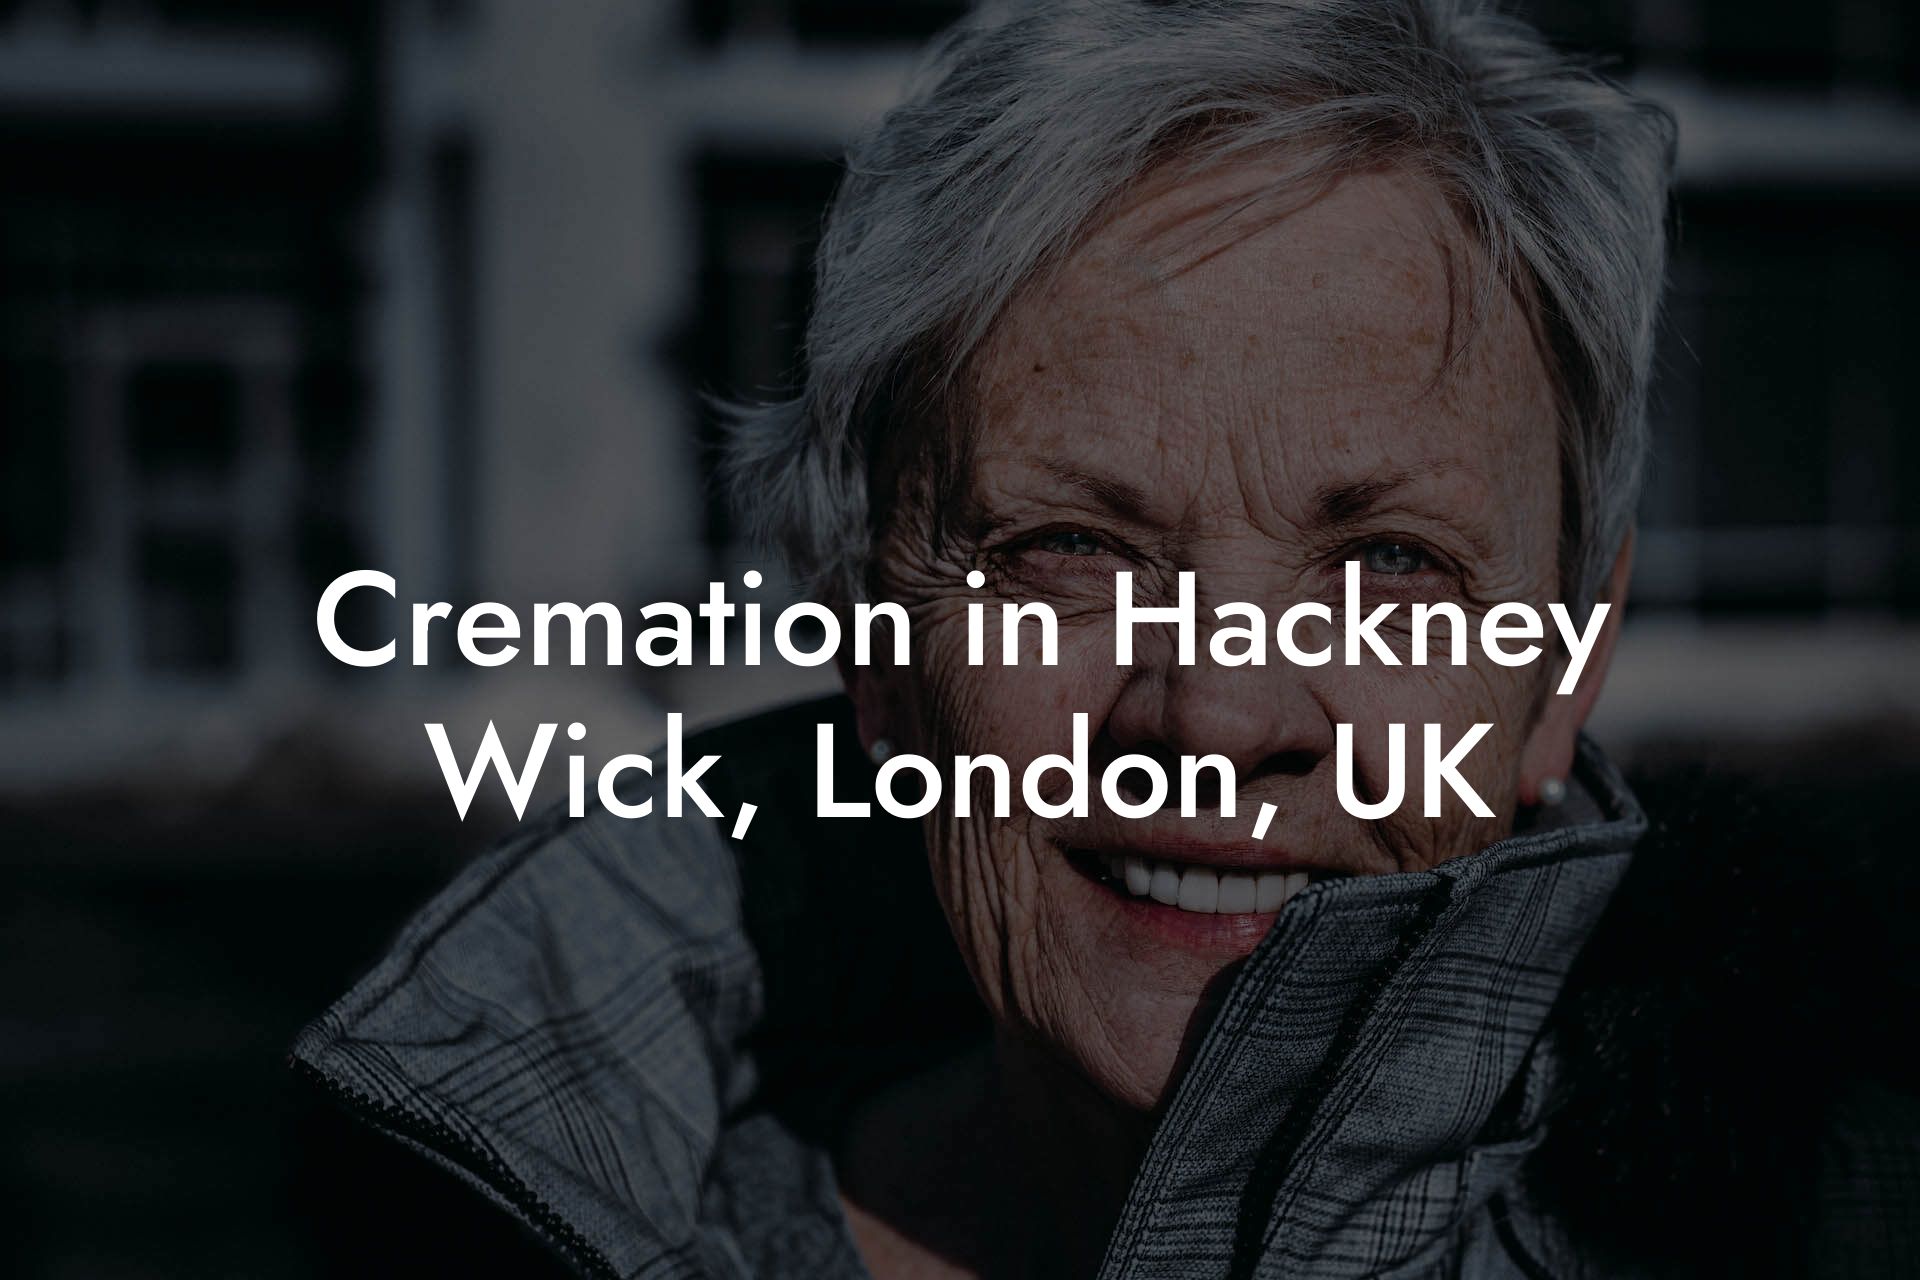 Cremation in Hackney Wick, London, UK